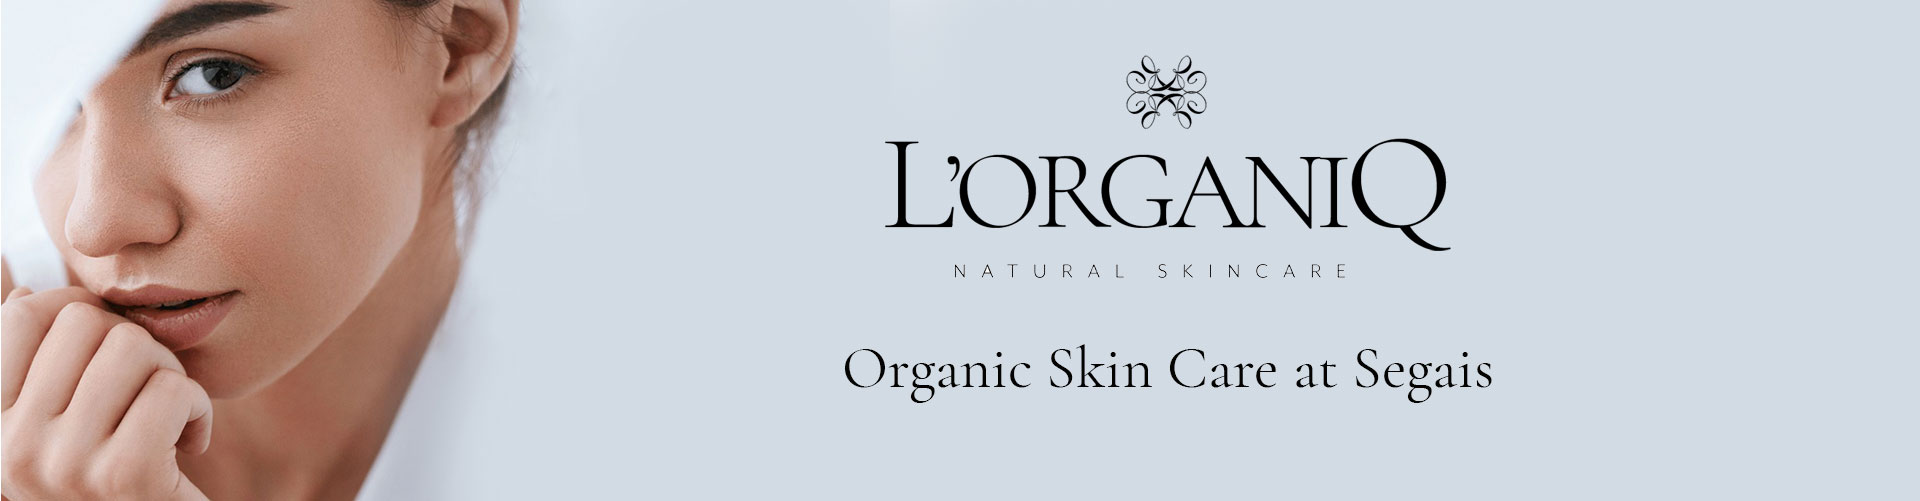 Organic Skin Care at Segais Wantage Beauty Salon